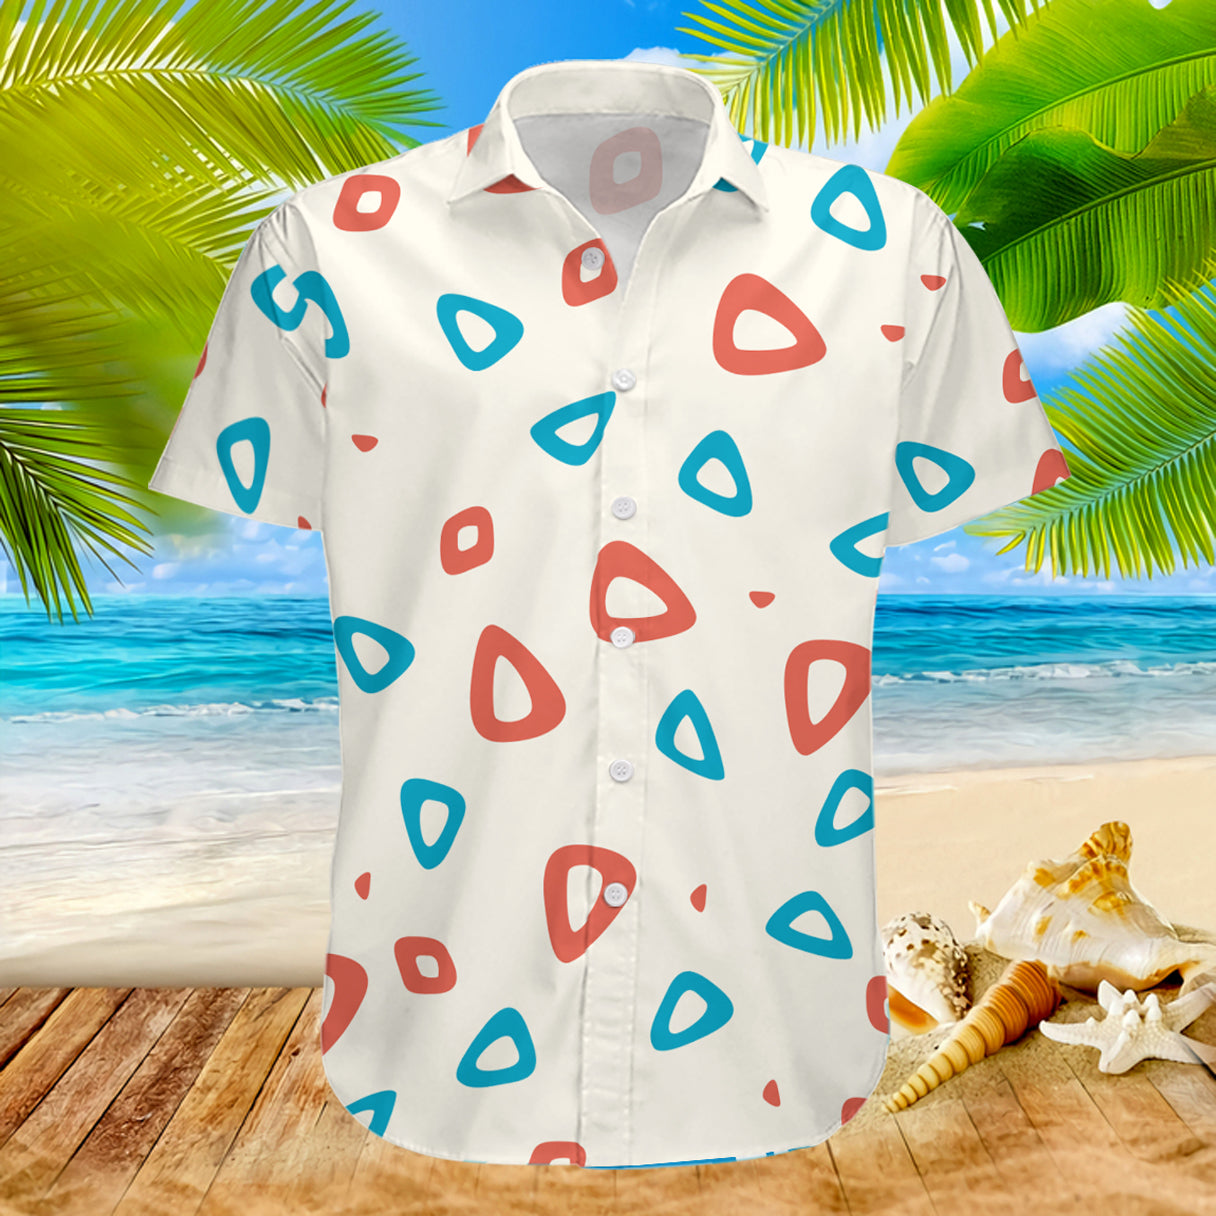 Tgp Pkm Hawaiian Shirts | Pokemon Super Cute Togepi Beach White ...